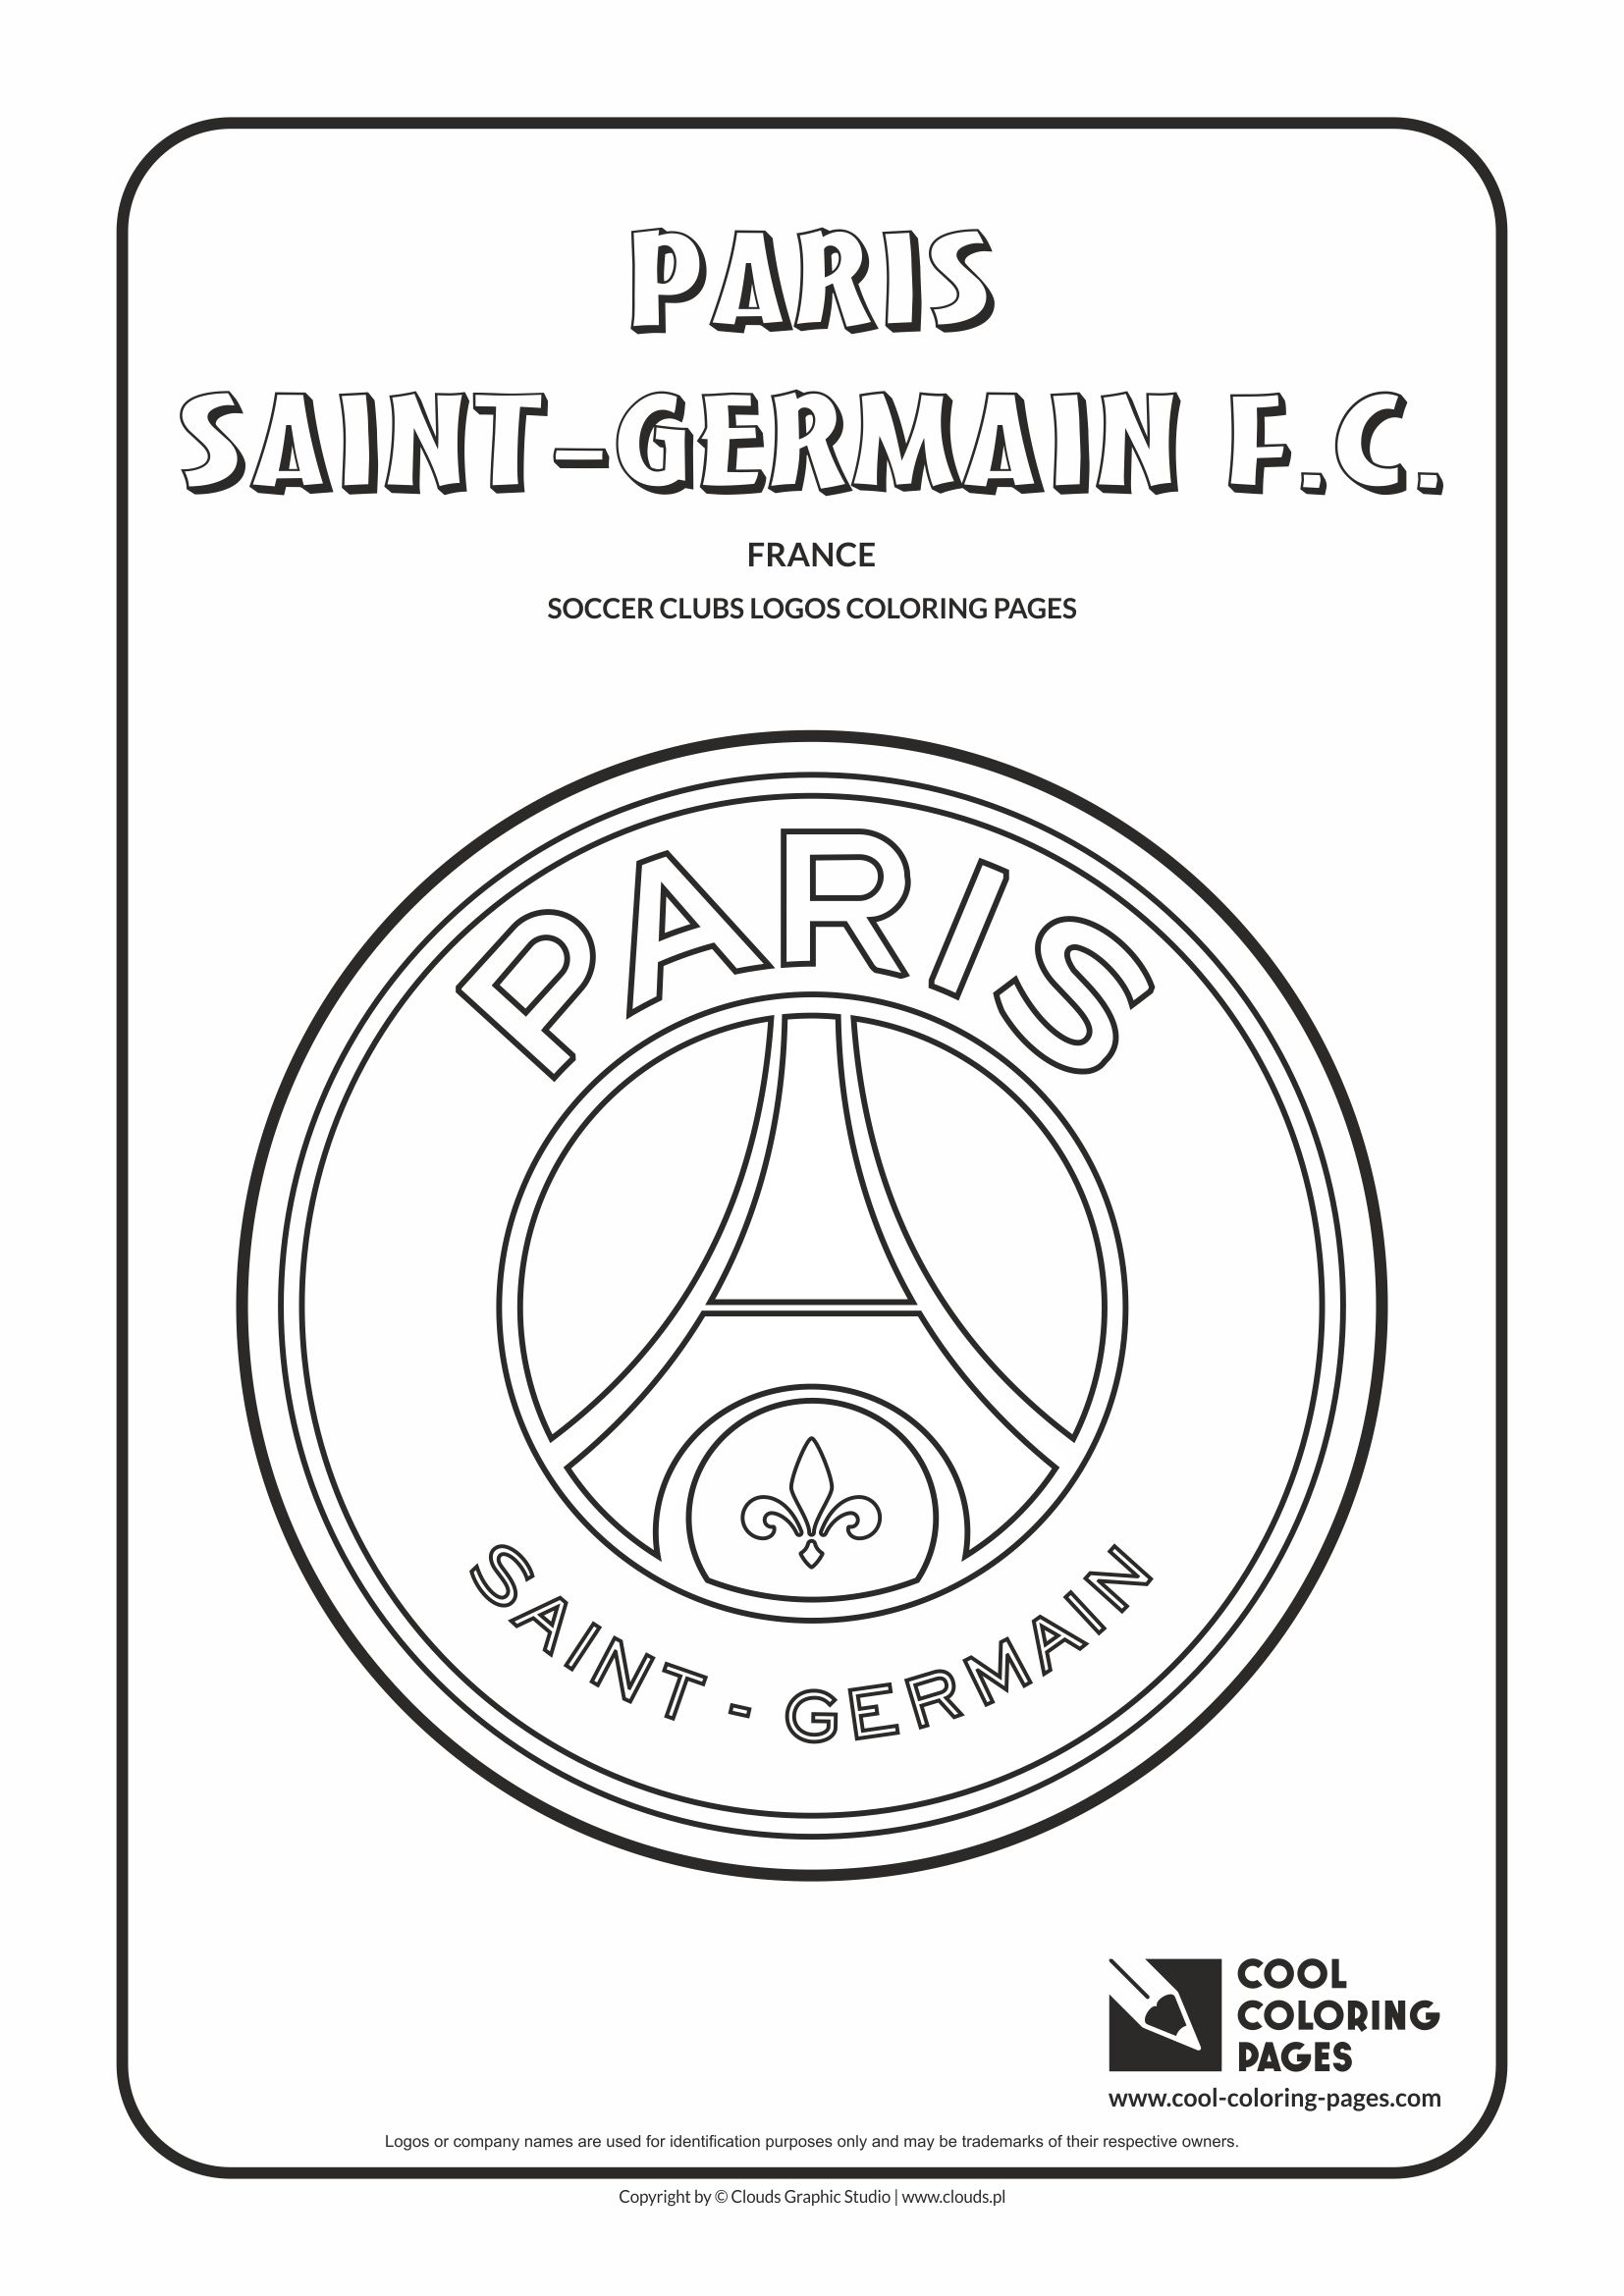 Cool Coloring Pages - Soccer Clubs Logos / Paris Saint-Germain F.C. logo / Coloring page with Paris Saint-Germain F.C. logo